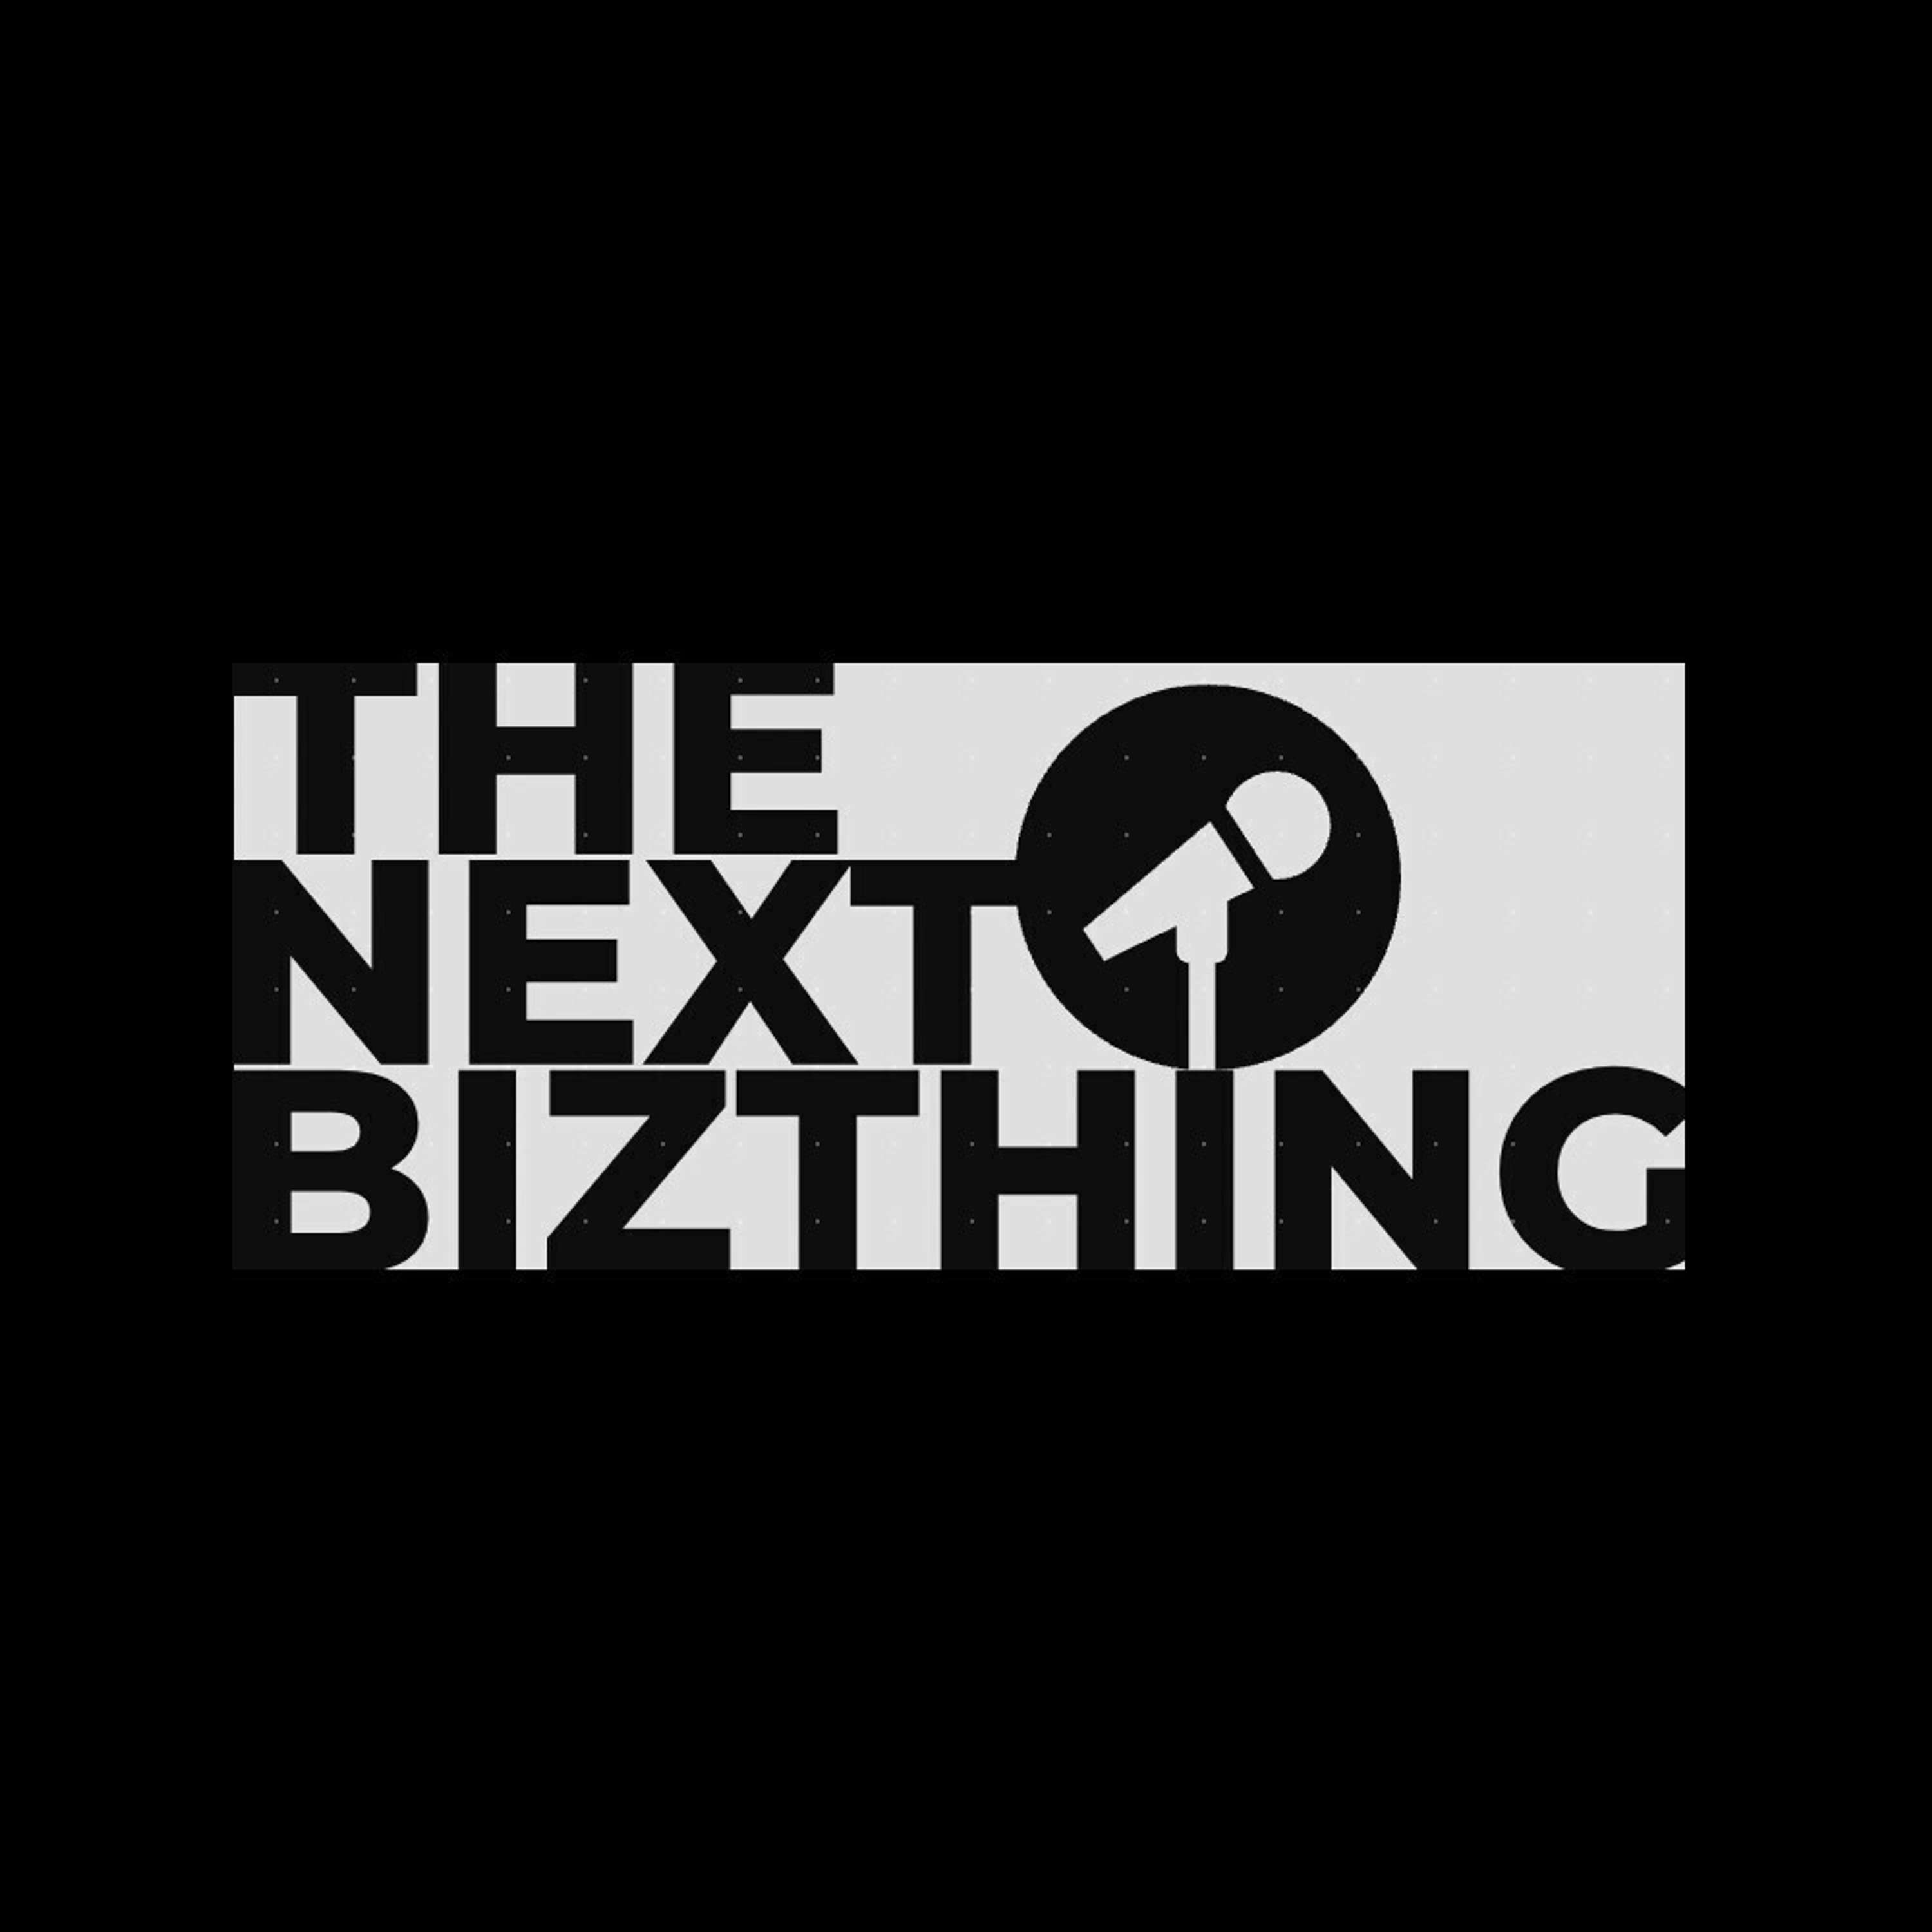 Markus J. Diplama Launches New Podcast Series ‘The Next Biz Thing’